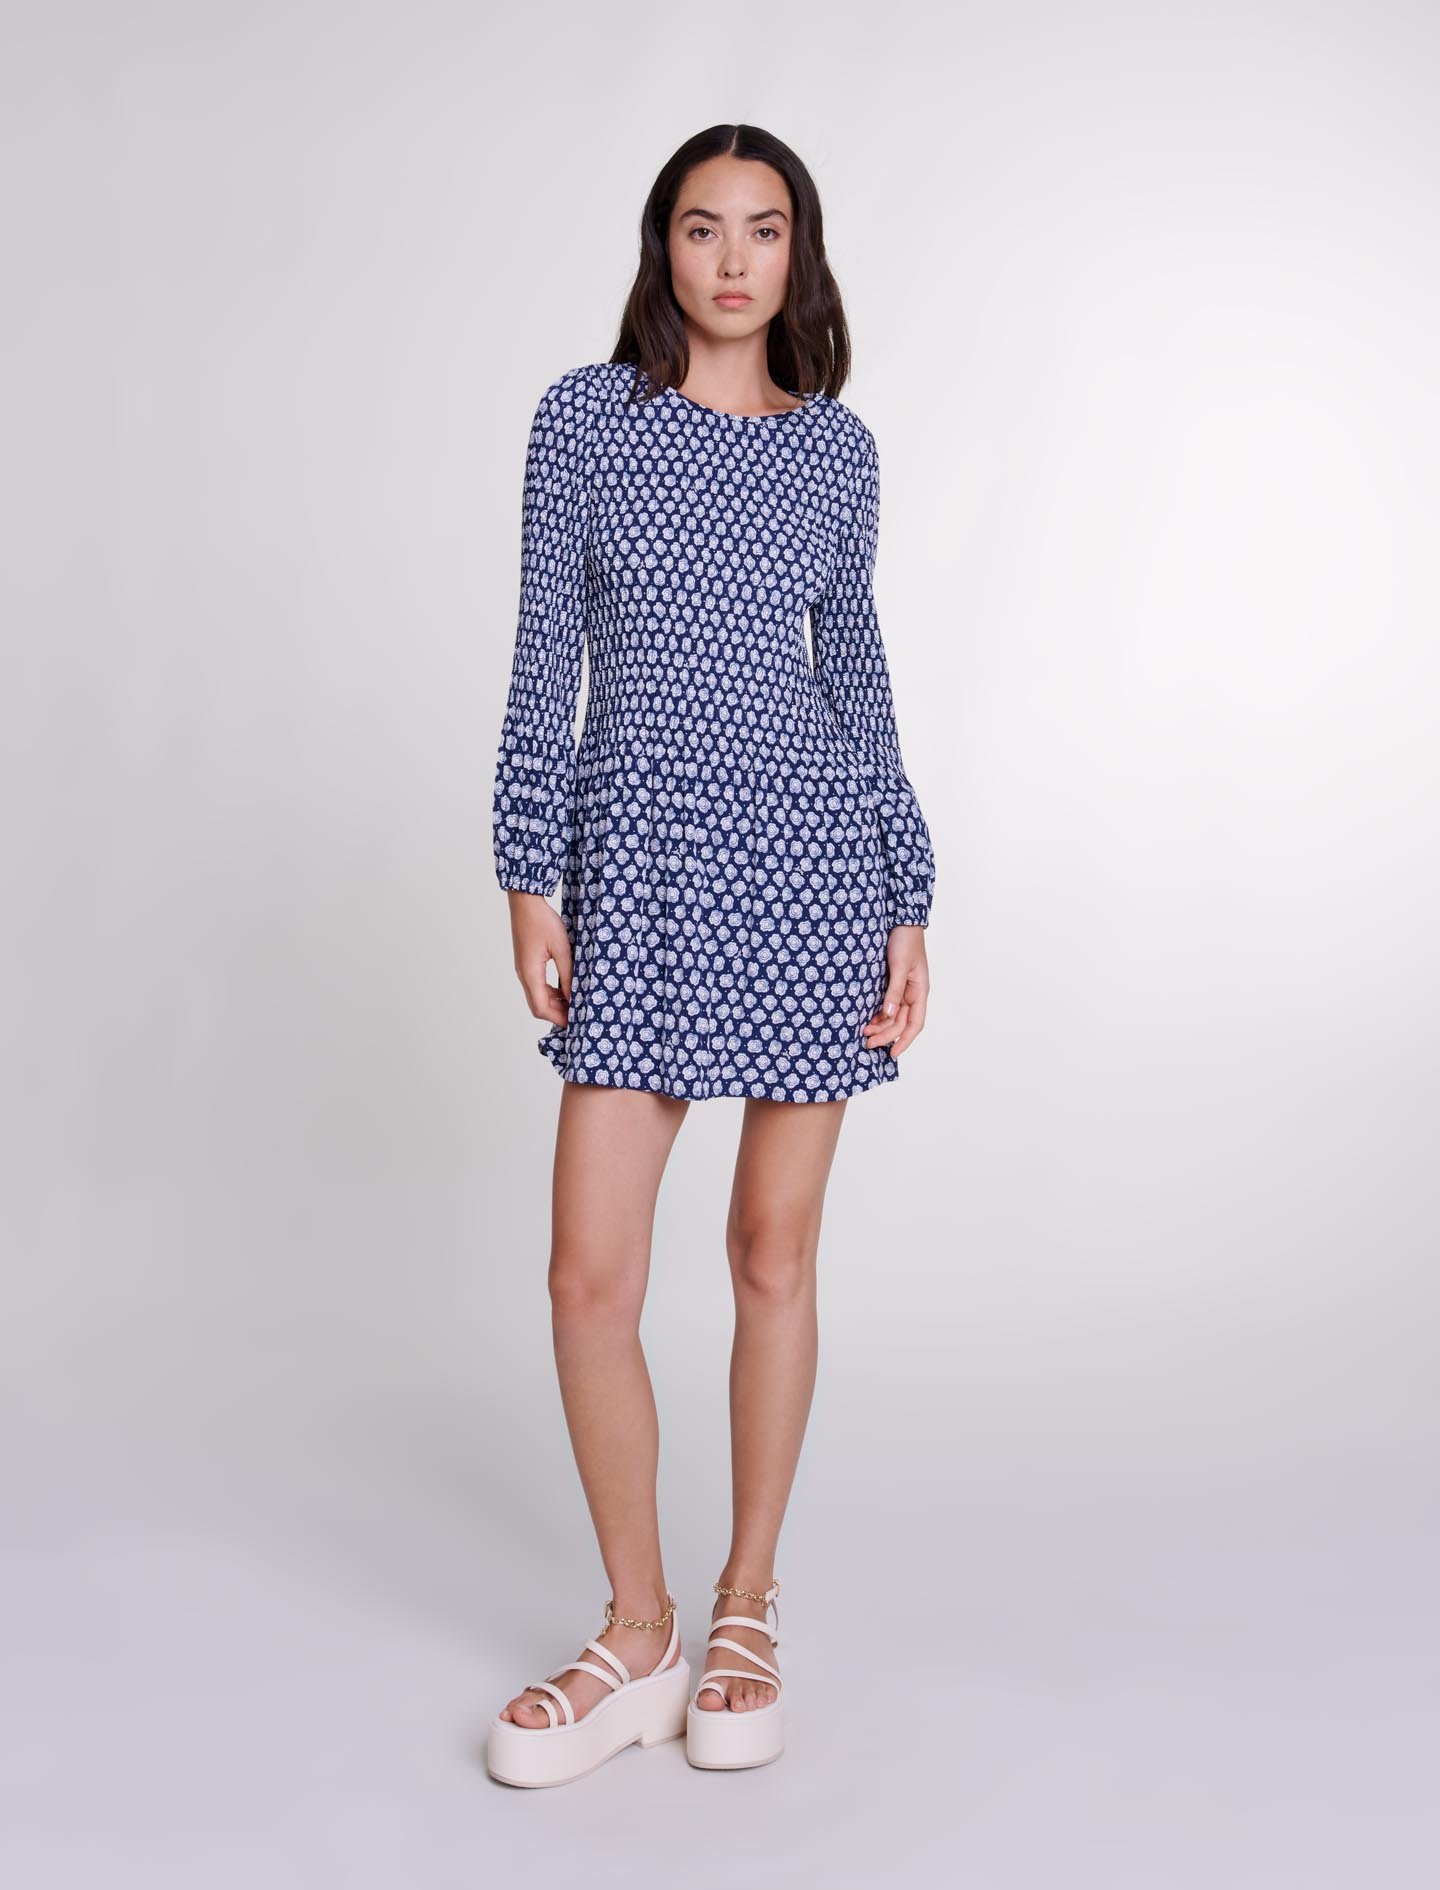 Mixte's polyester Short floral dress for Spring/Summer, size Mixte-Dresses-US XL / FR 41, in color Clover navy/ecru print /